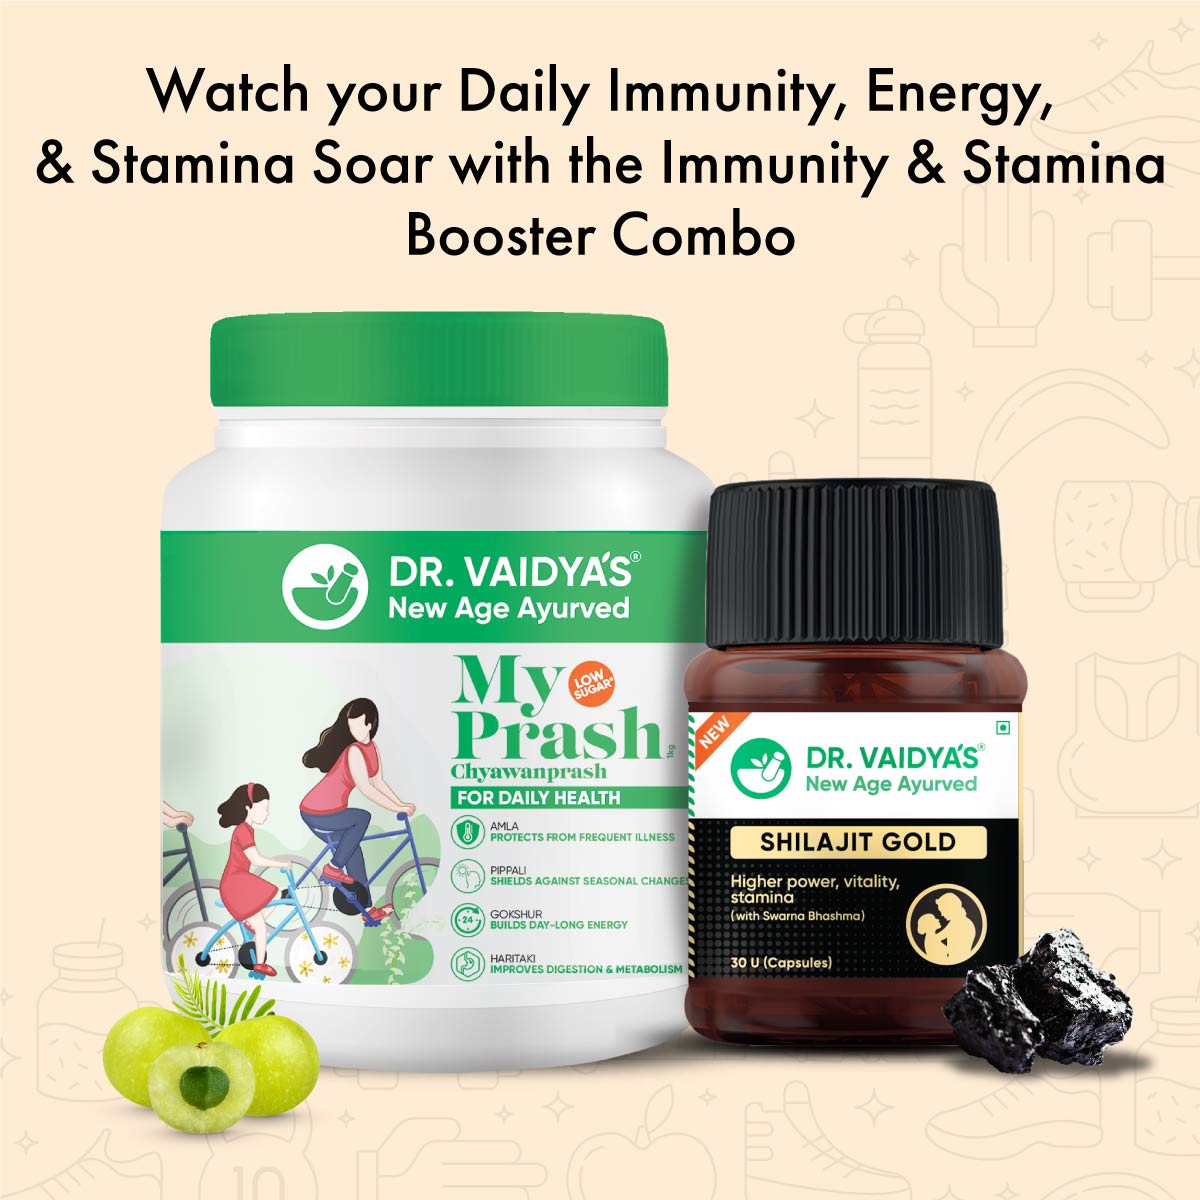 Immunity & Stamina Booster Combo